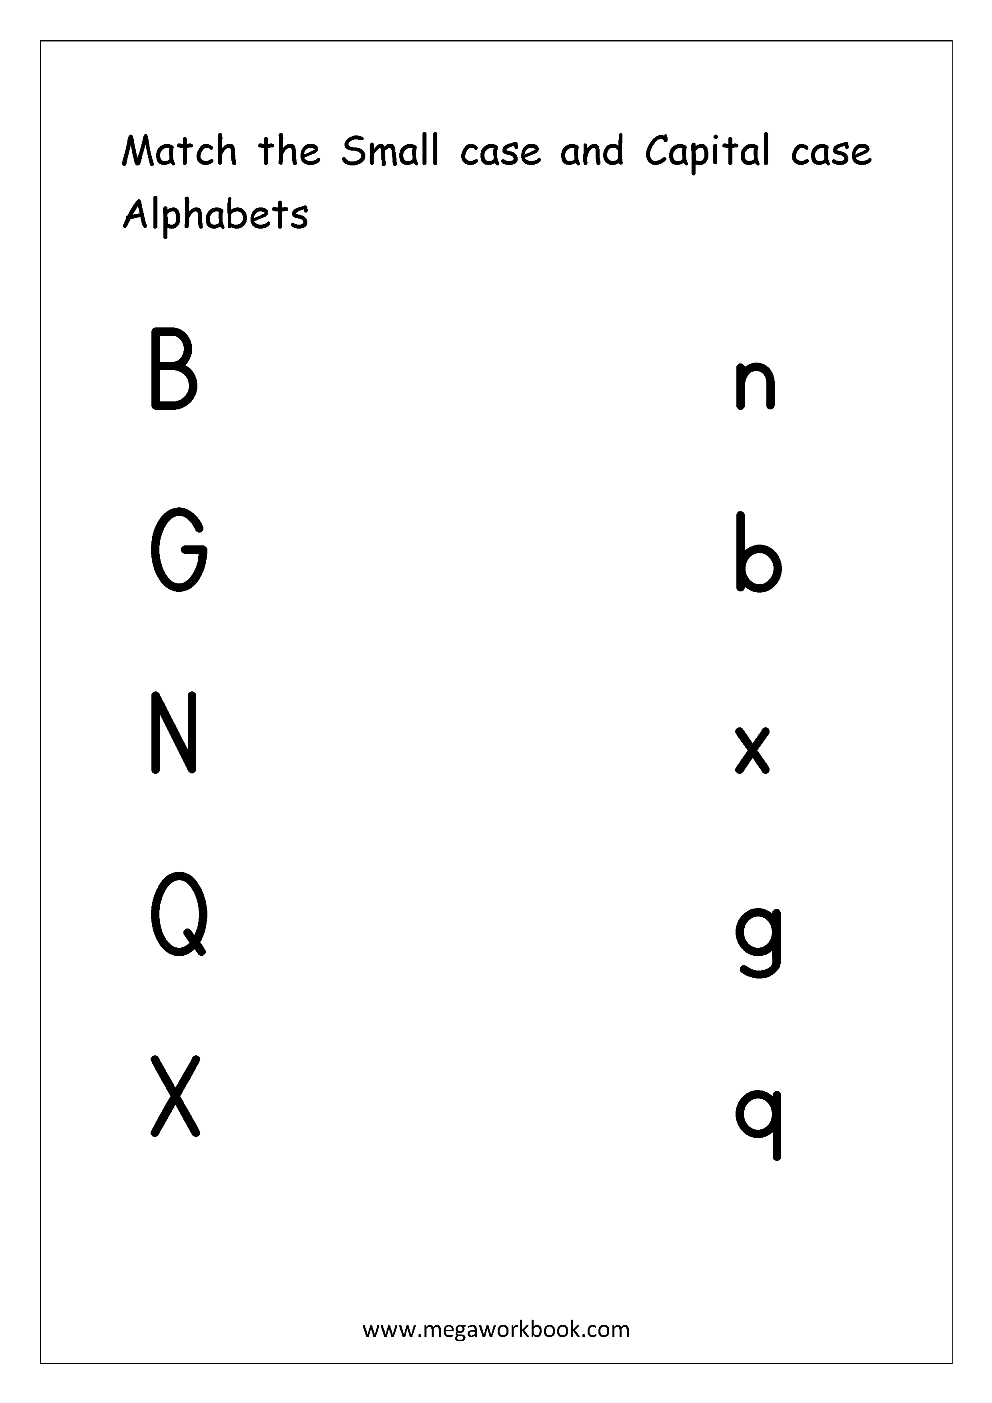 Free English Worksheets - Alphabet Matching - MegaWorkbook